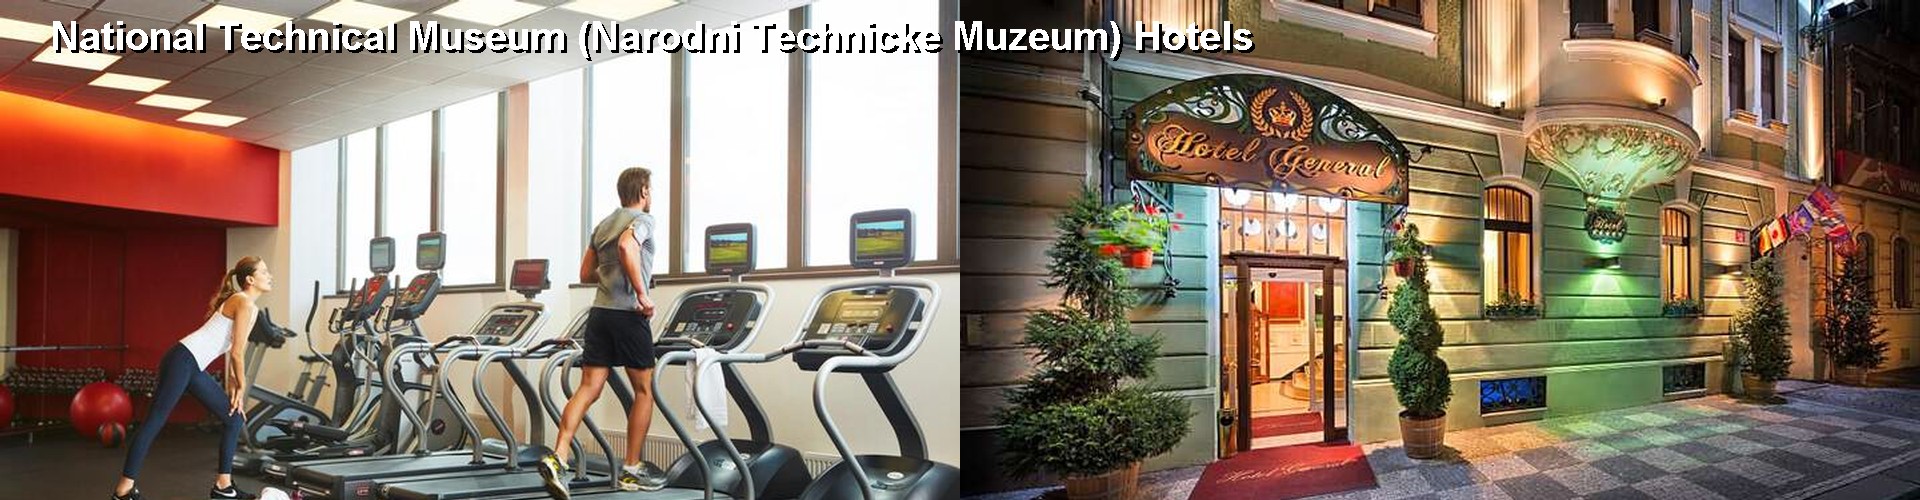 5 Best Hotels near National Technical Museum (Narodni Technicke Muzeum)